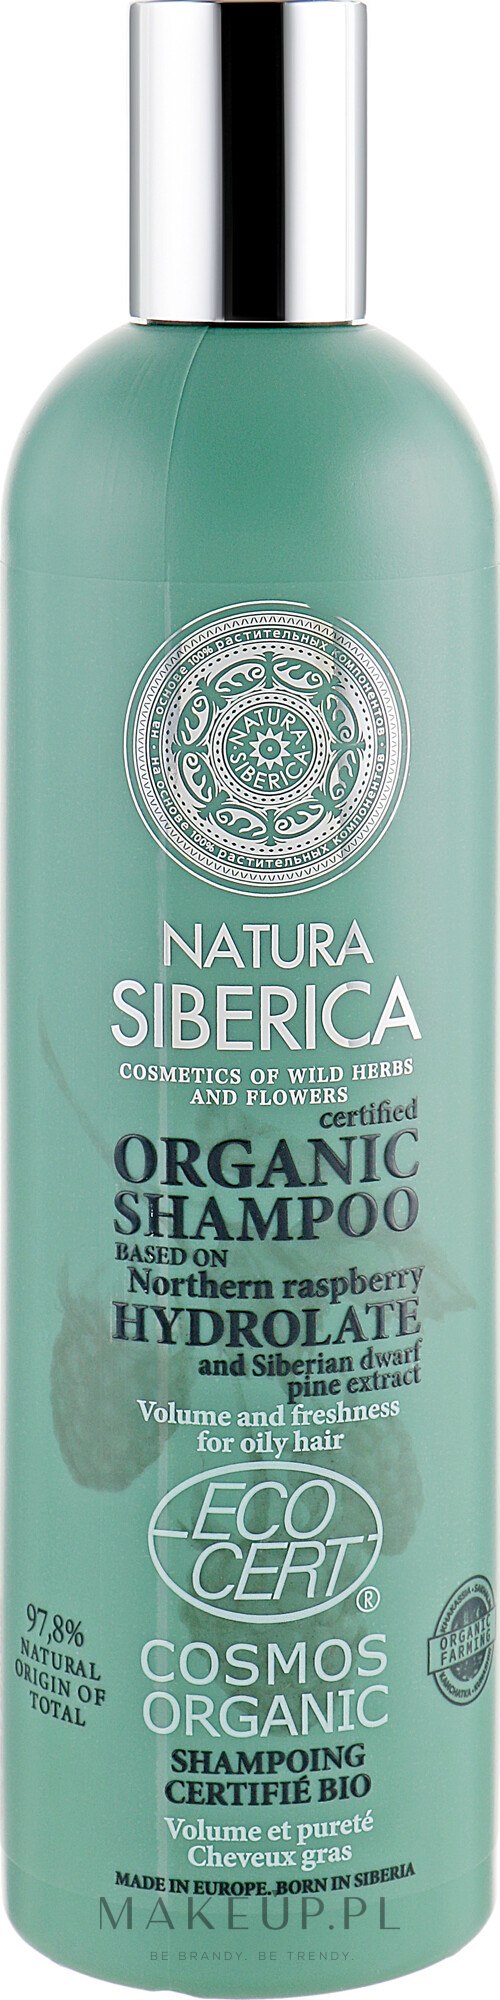 natura siberica szampon opinie